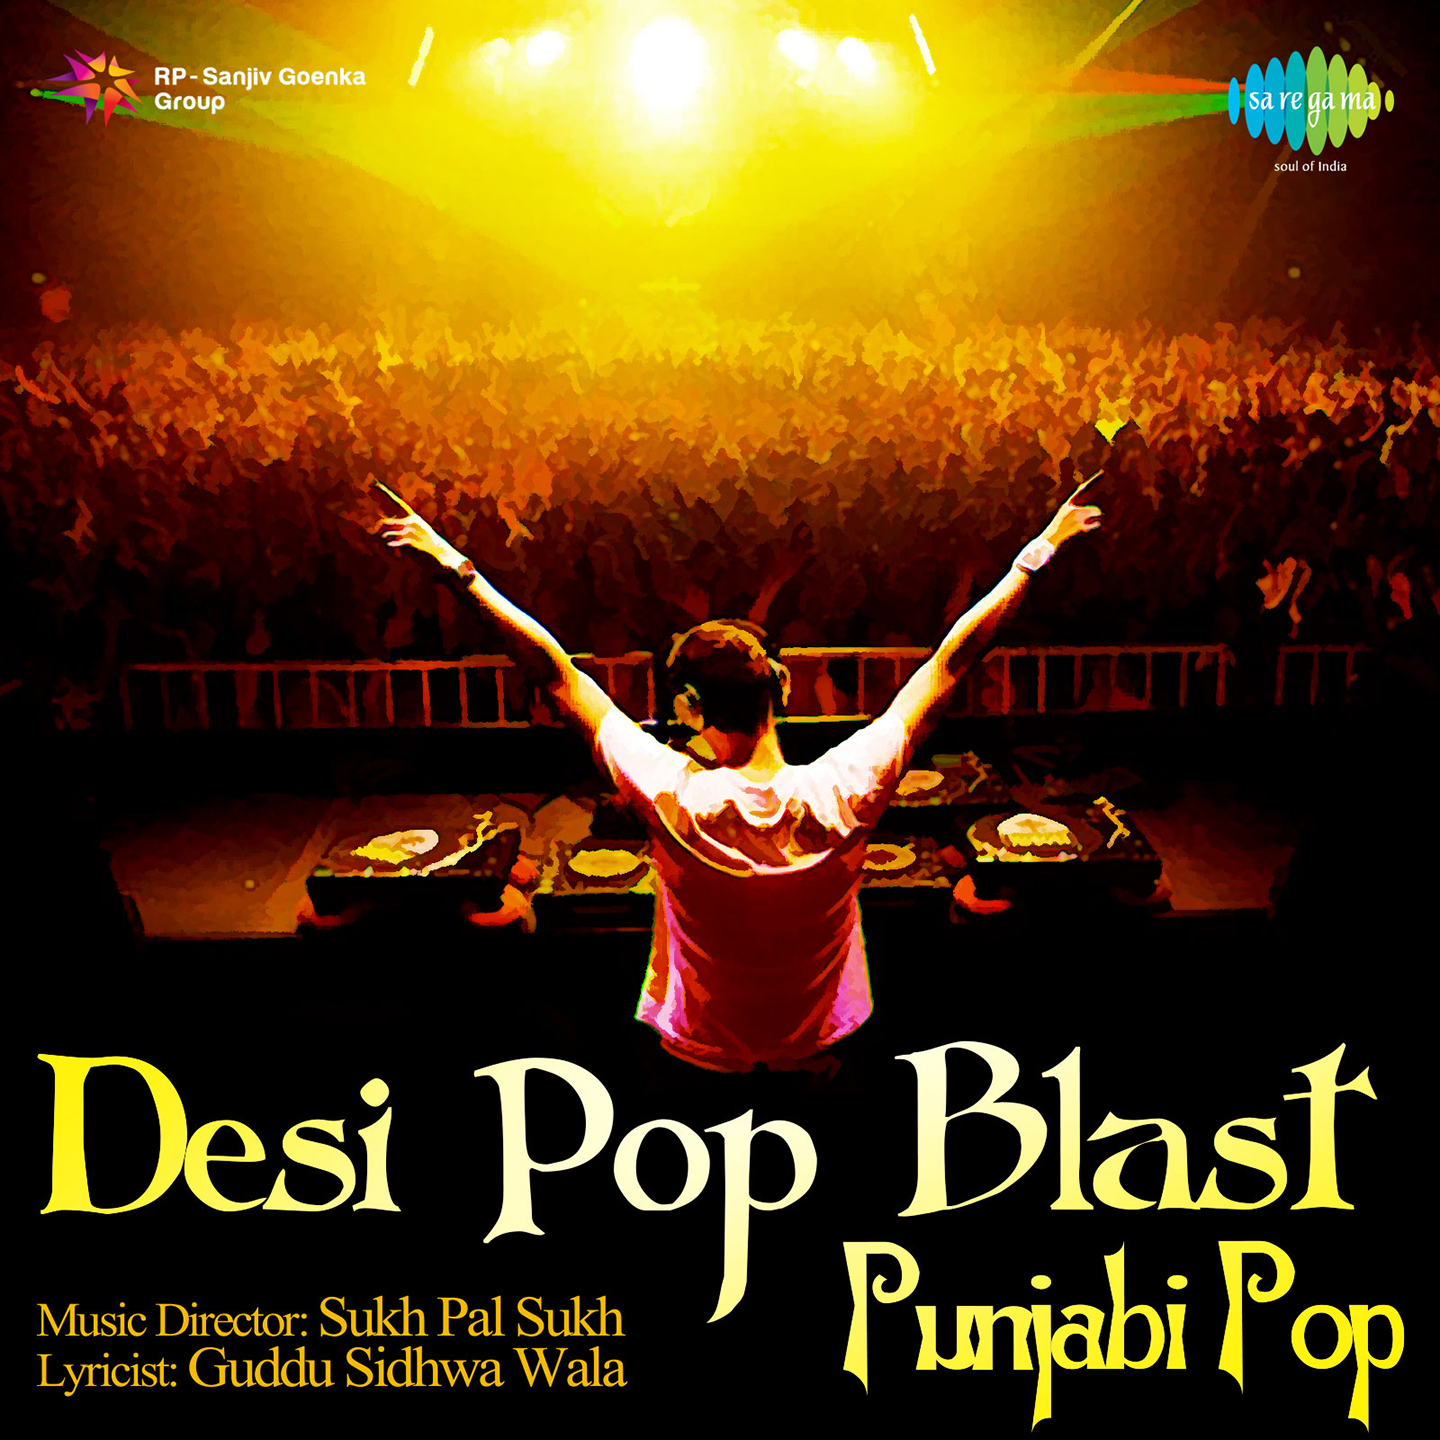 Desi Pop Blast Punjabi Pop